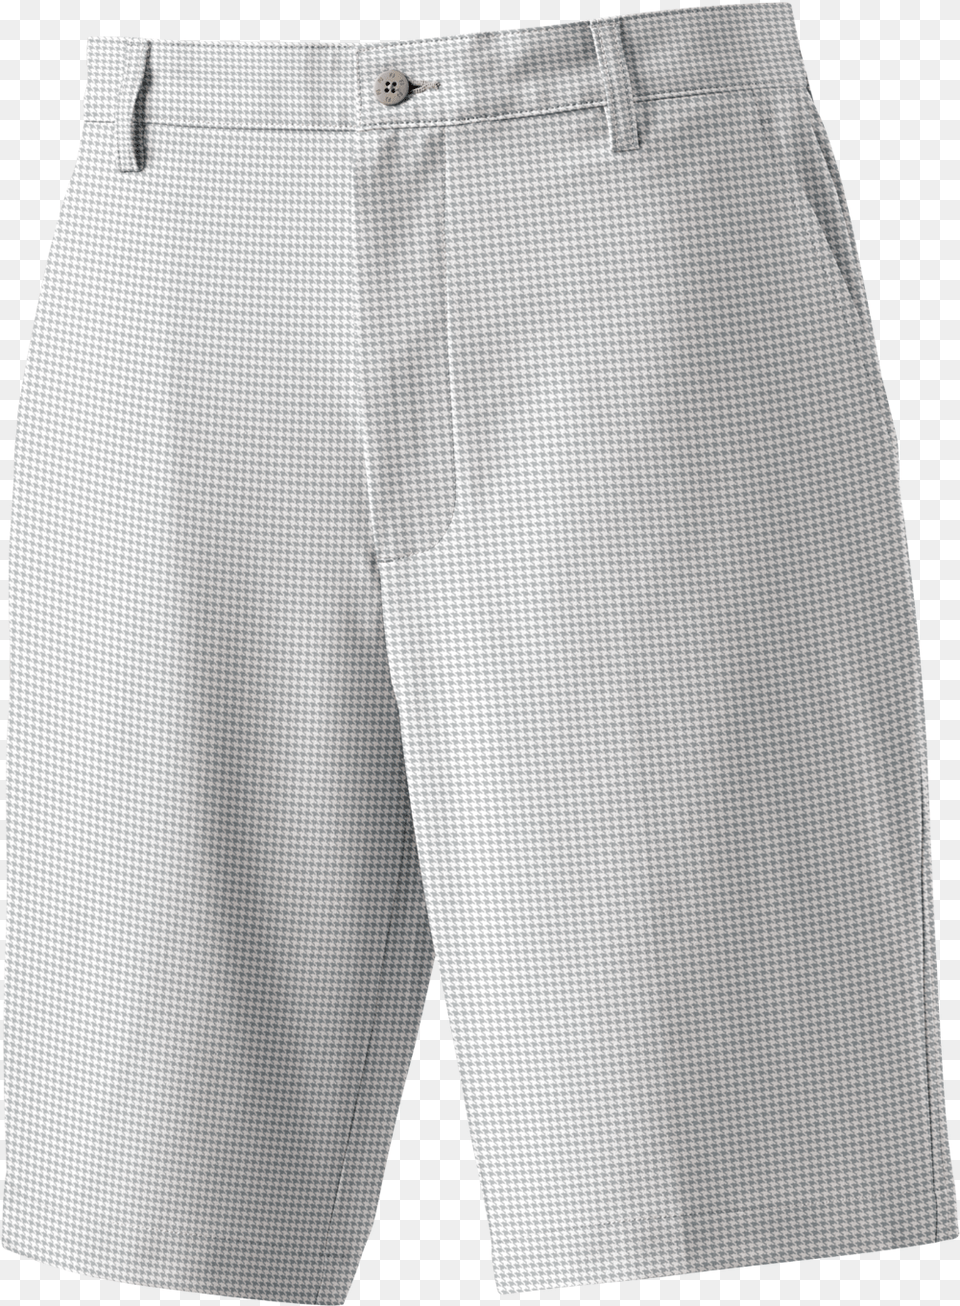 Bermuda Shorts, Clothing, Coat, Home Decor, Linen Free Transparent Png